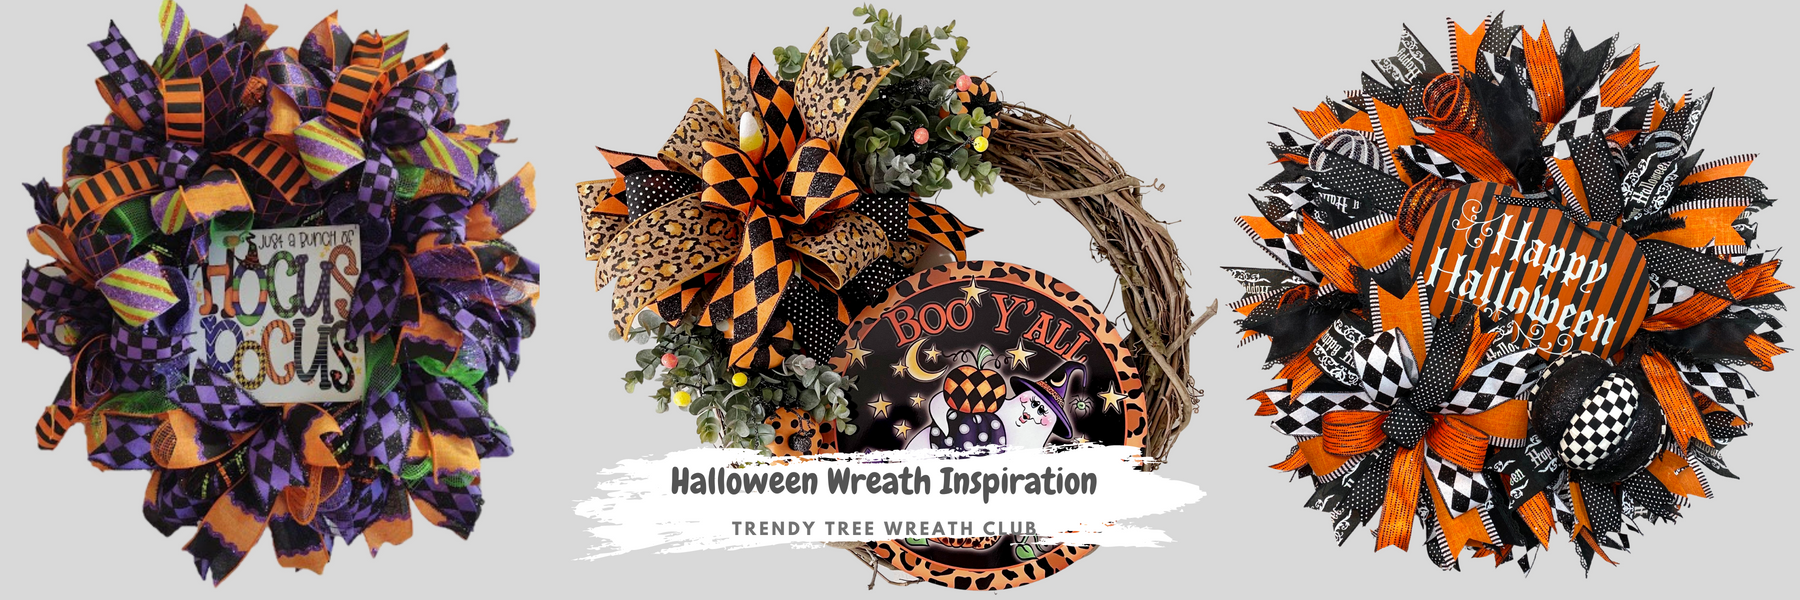 Halloween Wreath Inspiration from the Trendy Tree Wreath Club